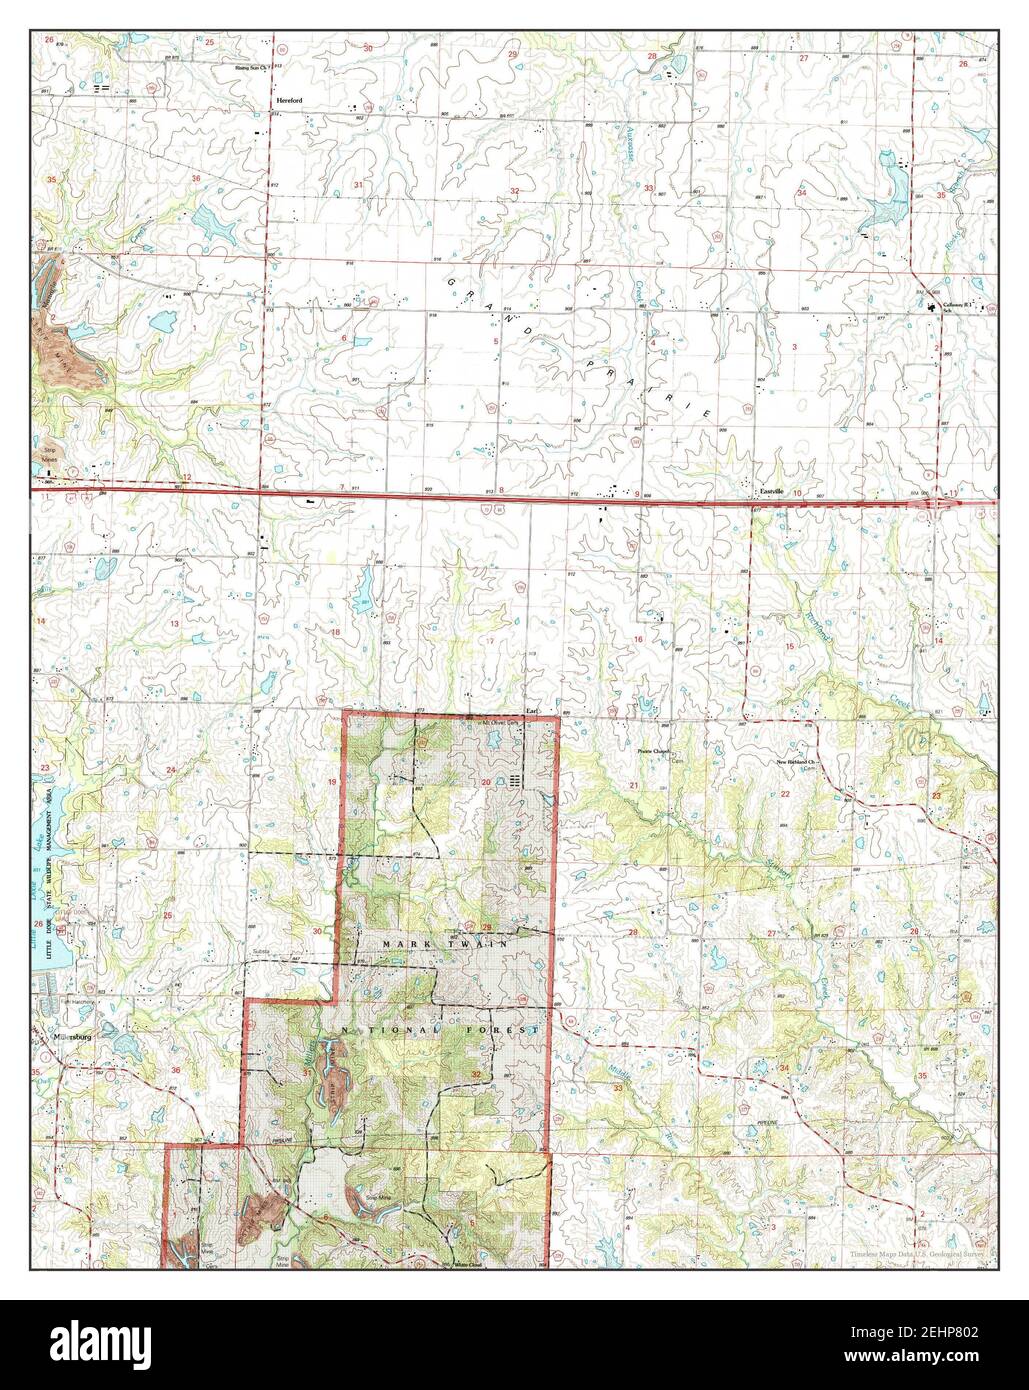 Millersburg NE, Missouri, map 2000, 1:24000, United States of America by Timeless Maps, data U.S. Geological Survey Stock Photo